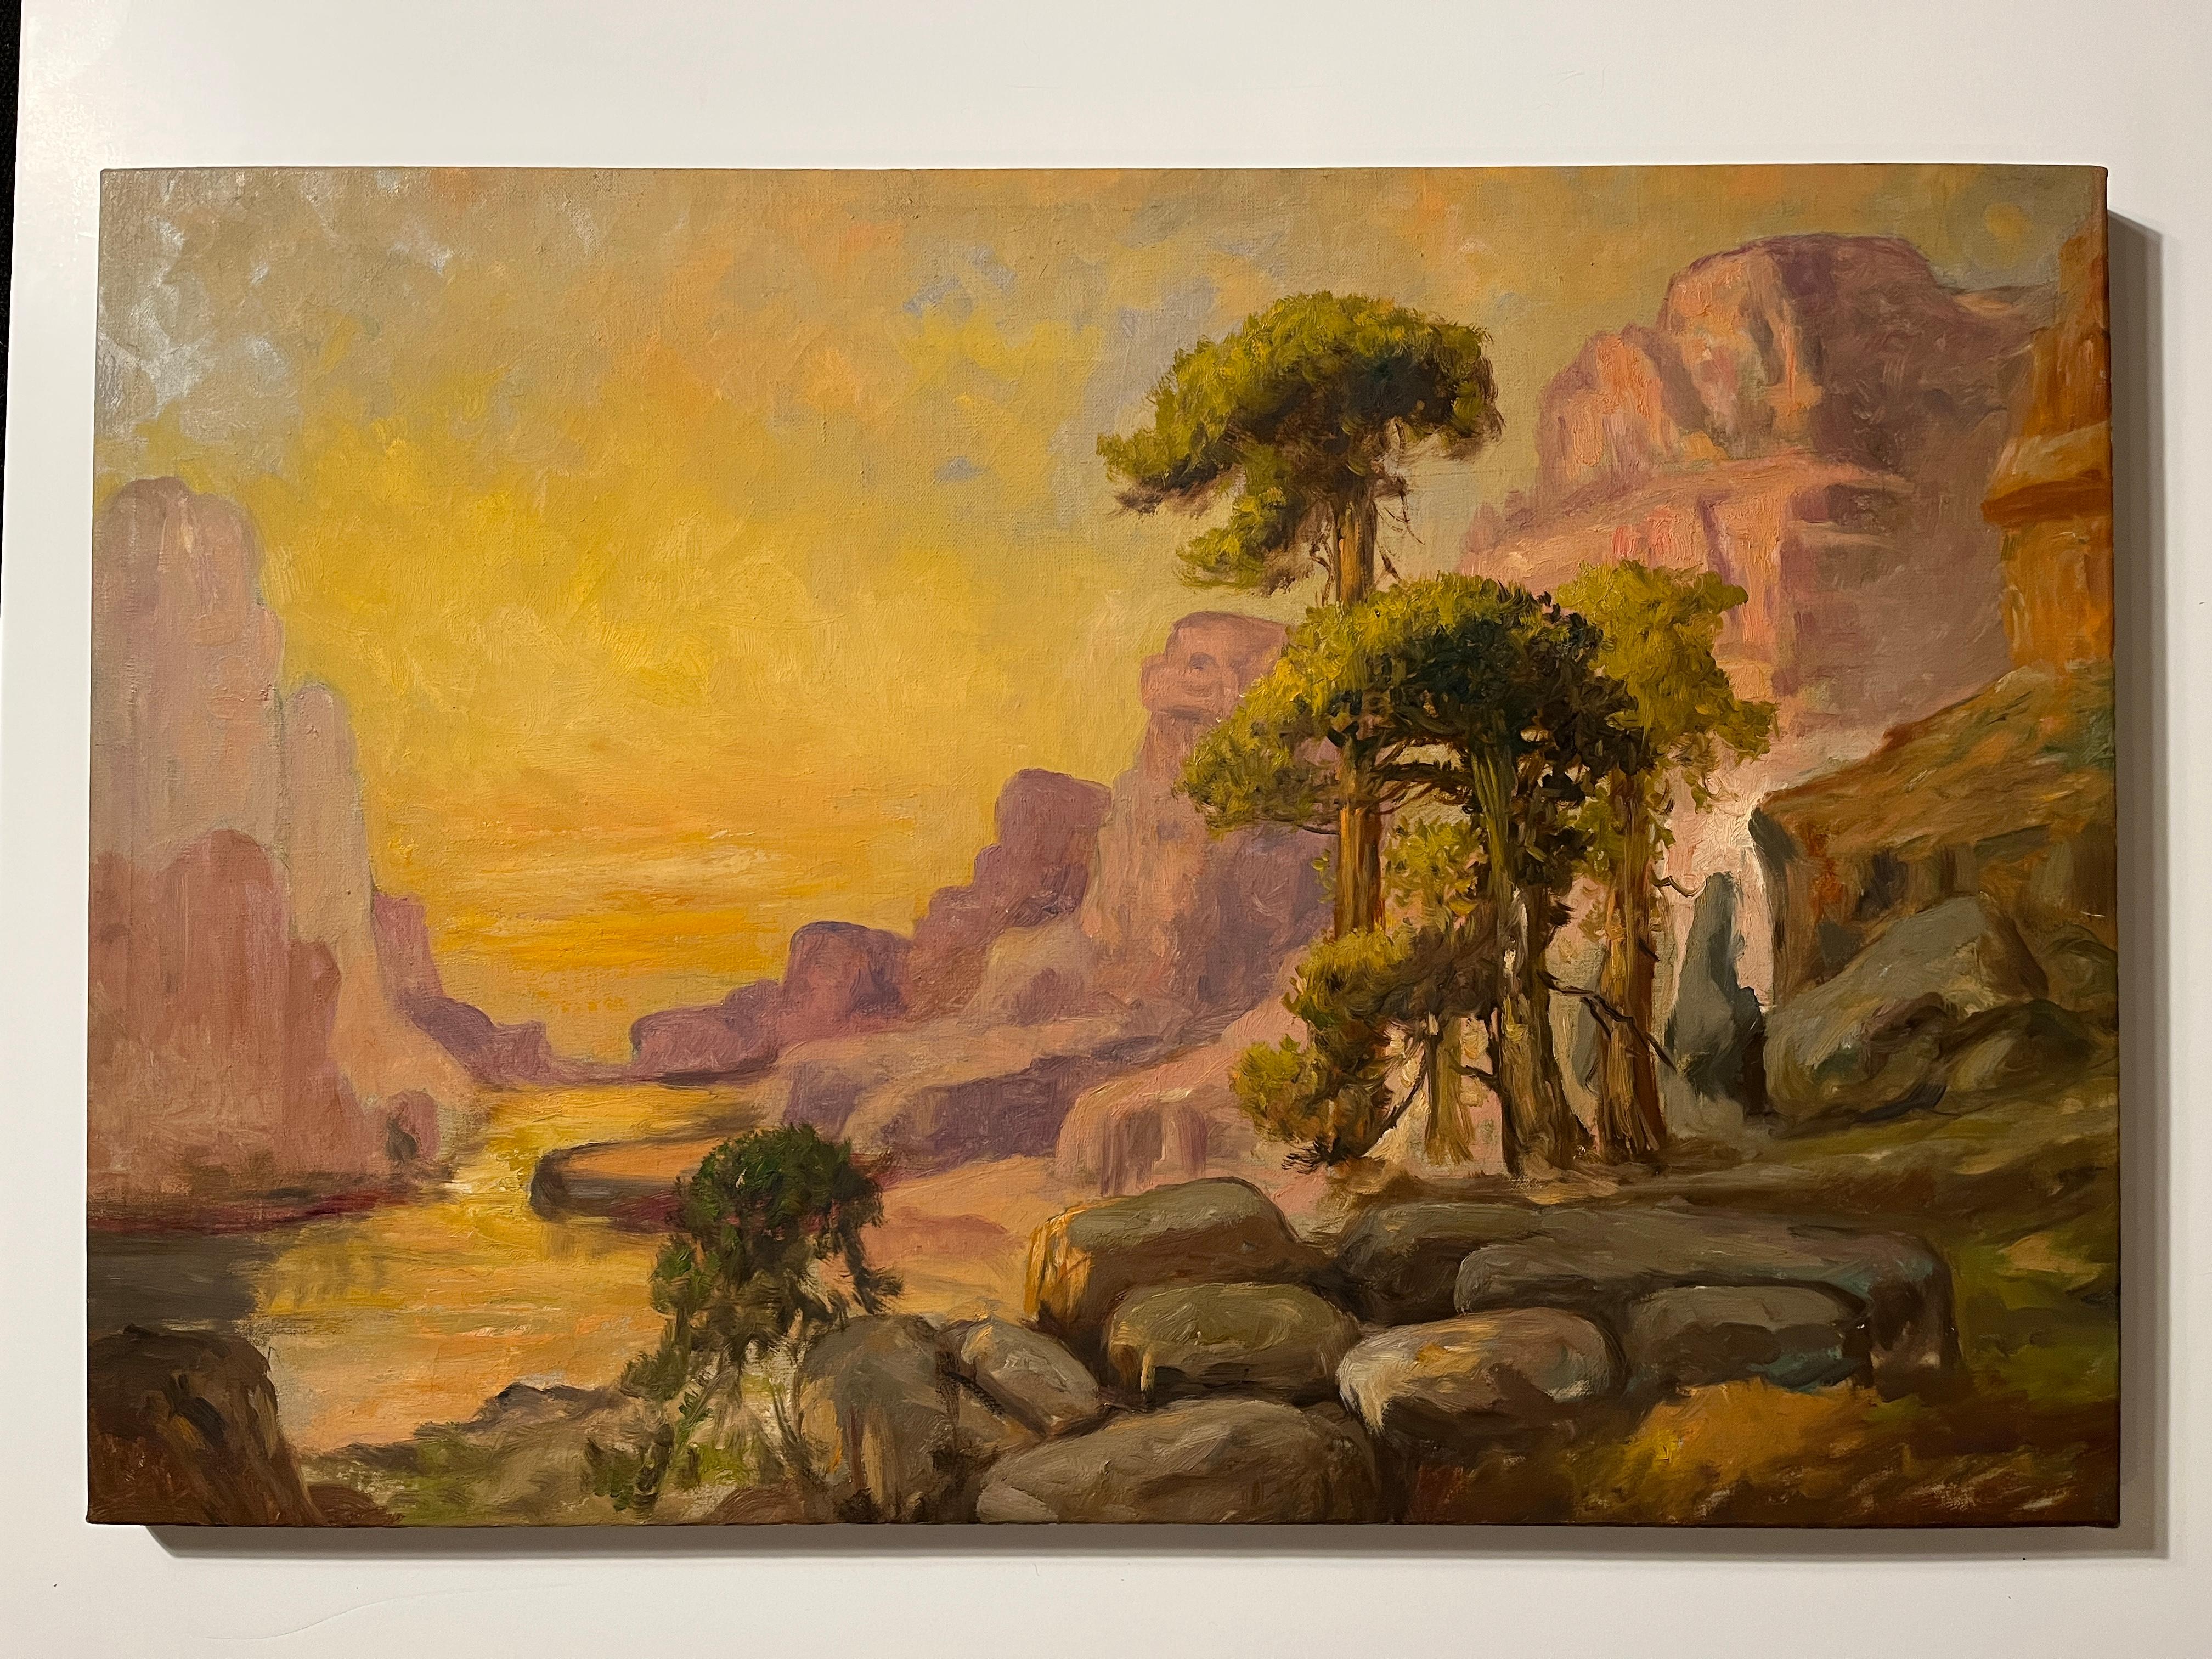 Ralph Davison Miller Landscape Painting - 1910's "Desert Landscape" Oil Painting